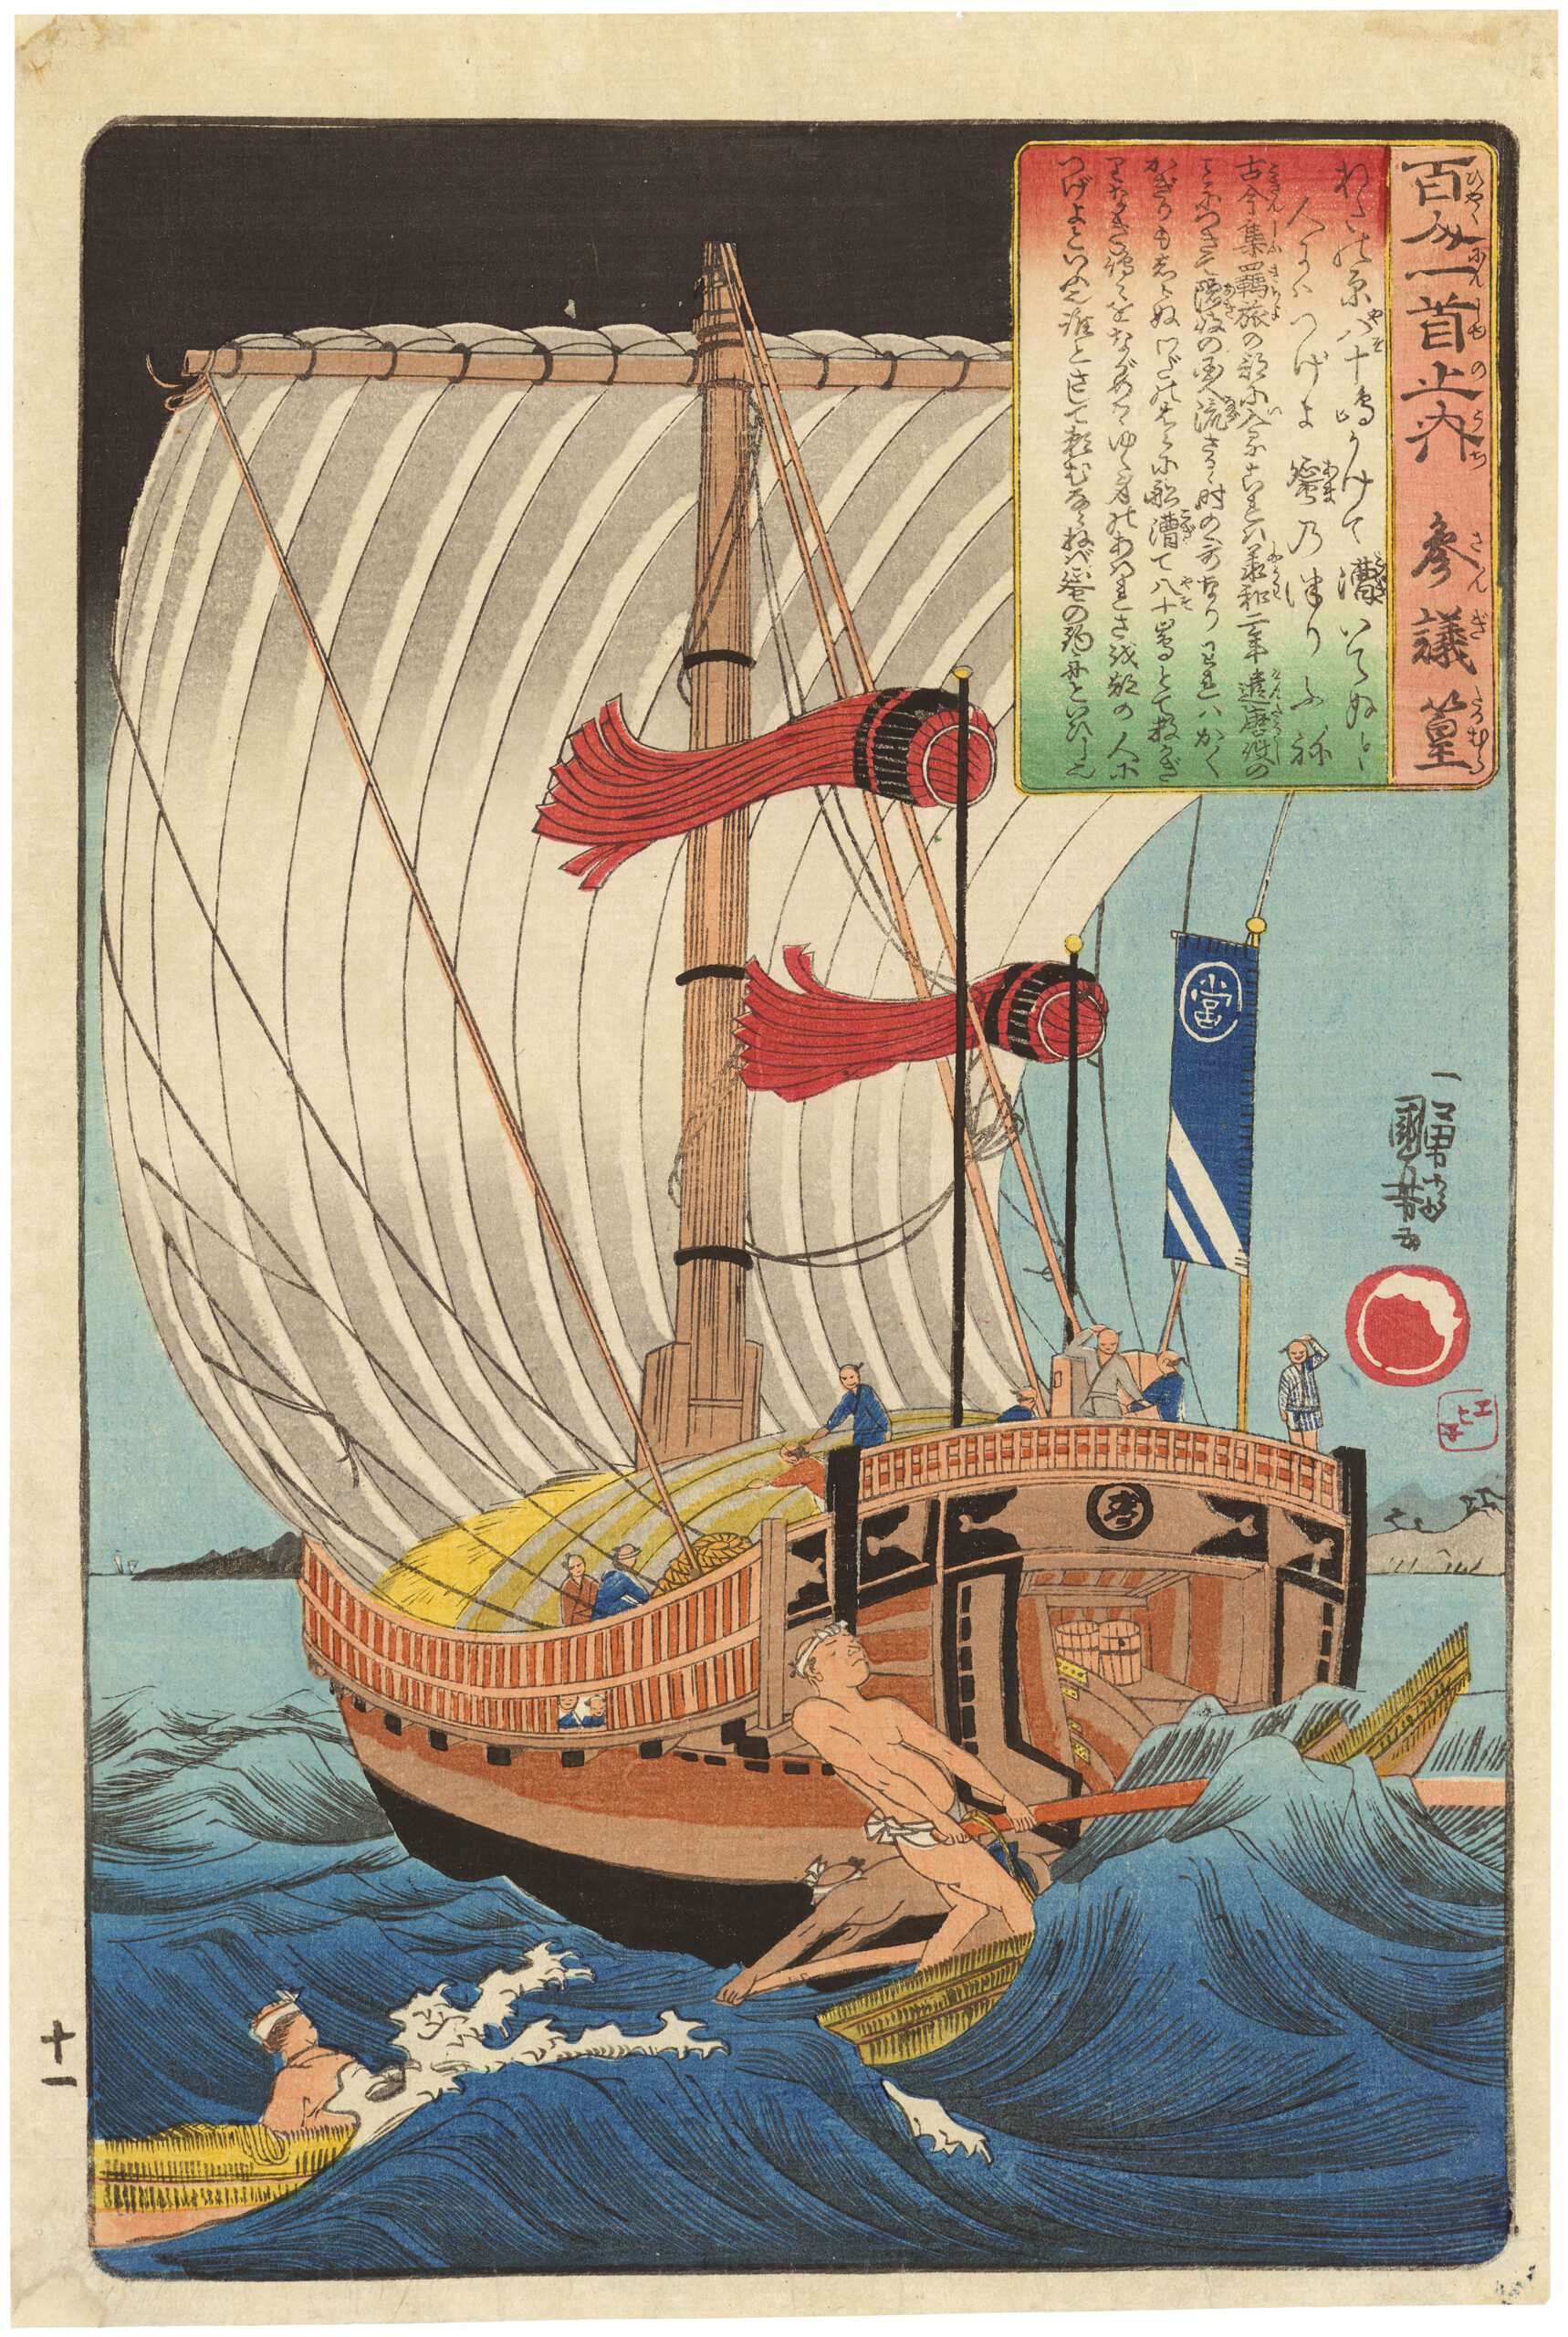 Utagawa Kuniyoshi (1797-1861), 'Poem by Sangi Takamura', from the series 'One Hundred Poems by One Hundred Poets' (Hyakunin Isshu no uchi), woodblock print, circa 1840-42 vertical oban: 38.5 x 25.7 cm (15 1/8 x 10 1/8 in)